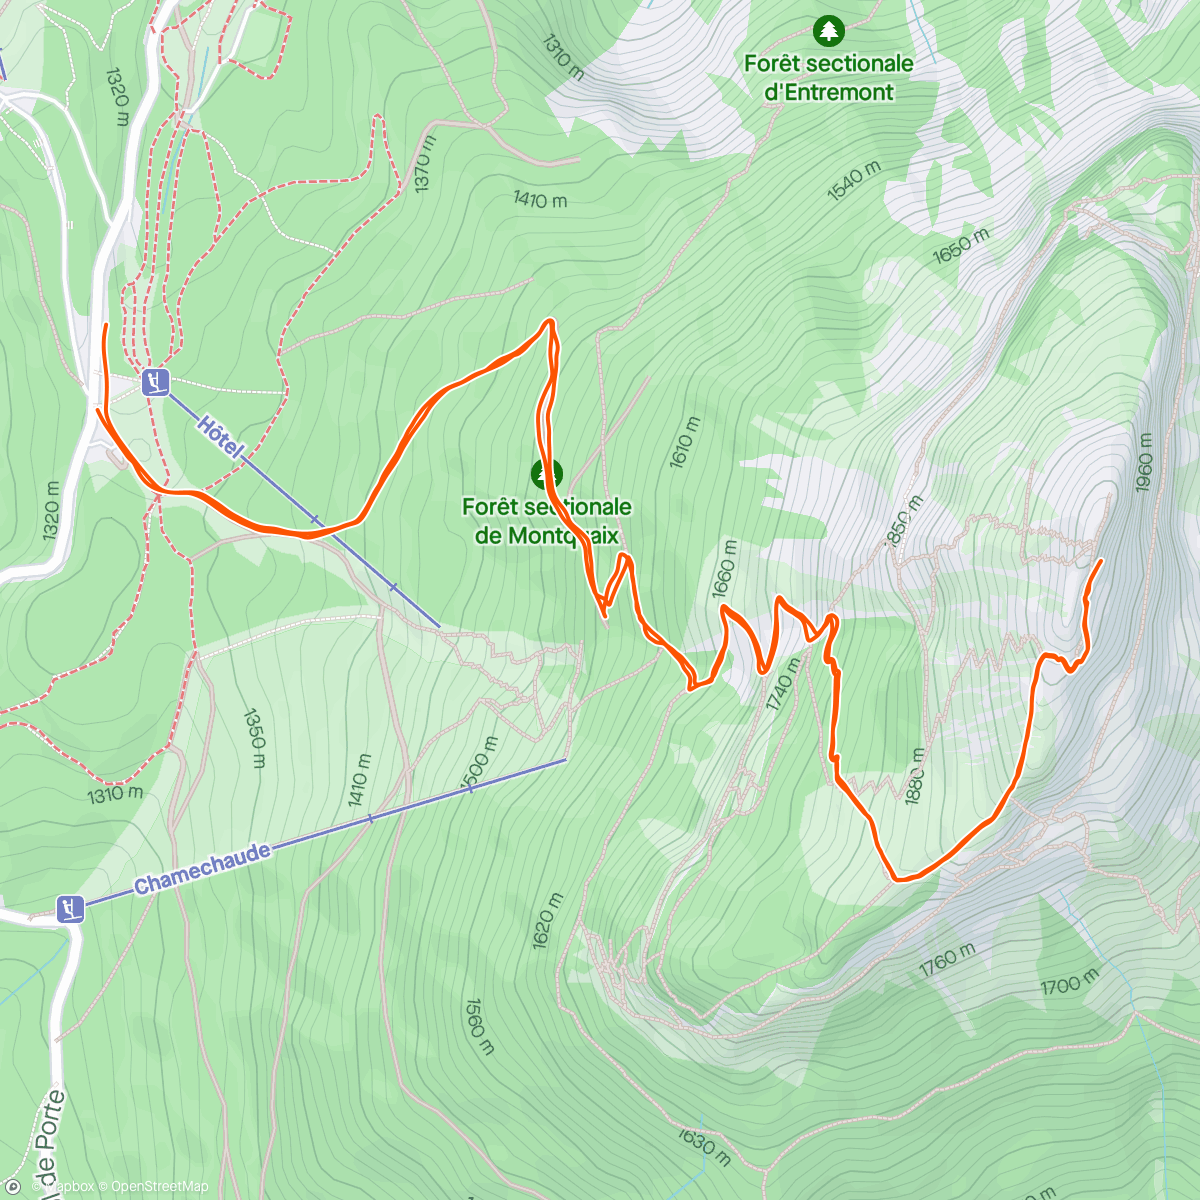 Map of the activity, Chamechaude